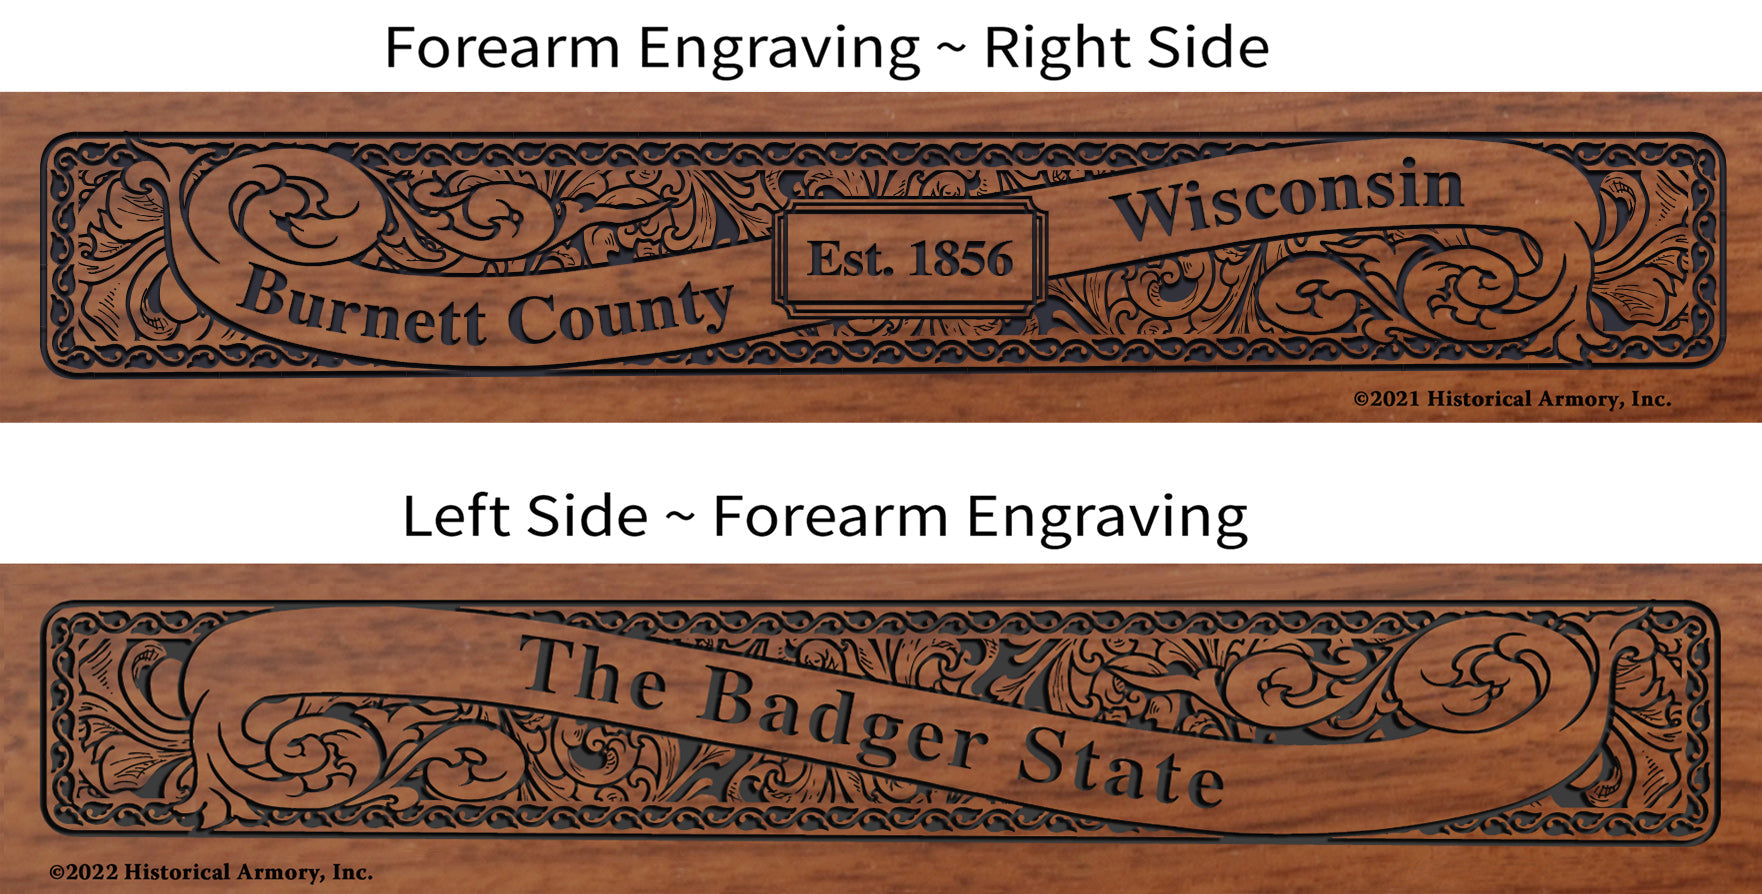 Burnett County Wisconsin Engraved Rifle Forearm